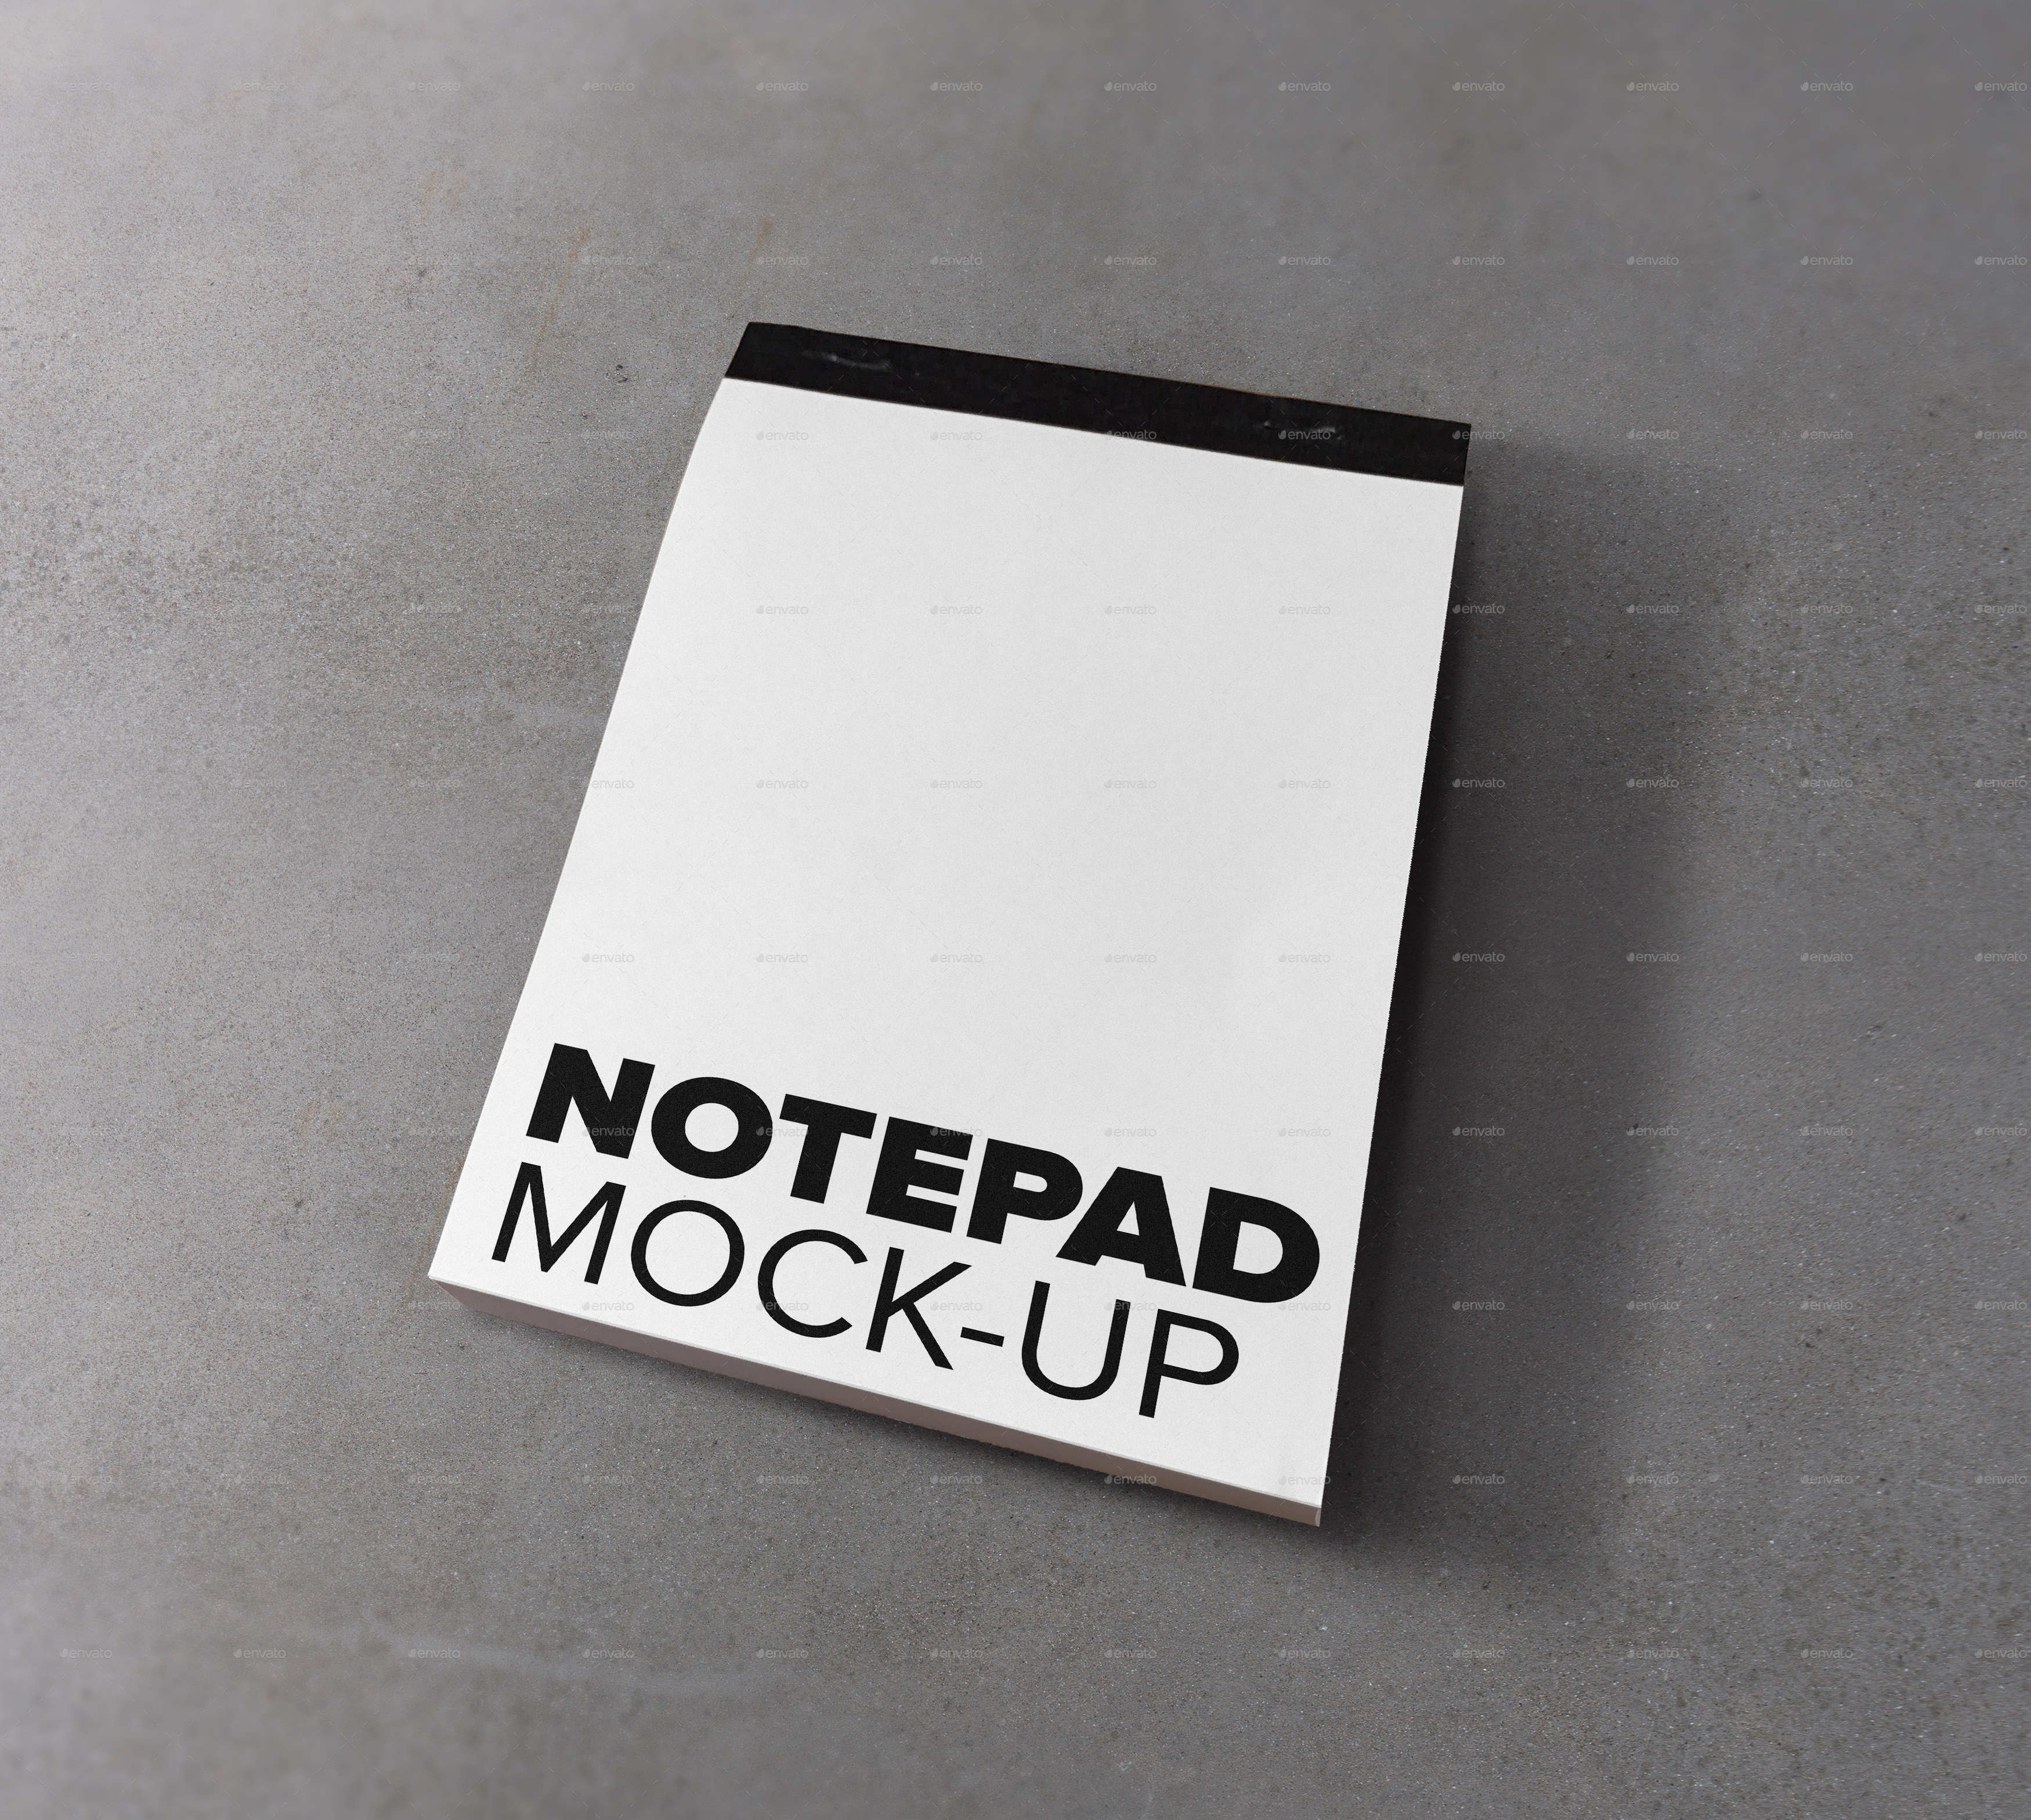 Download Notepad Mockup by mockupbank | GraphicRiver